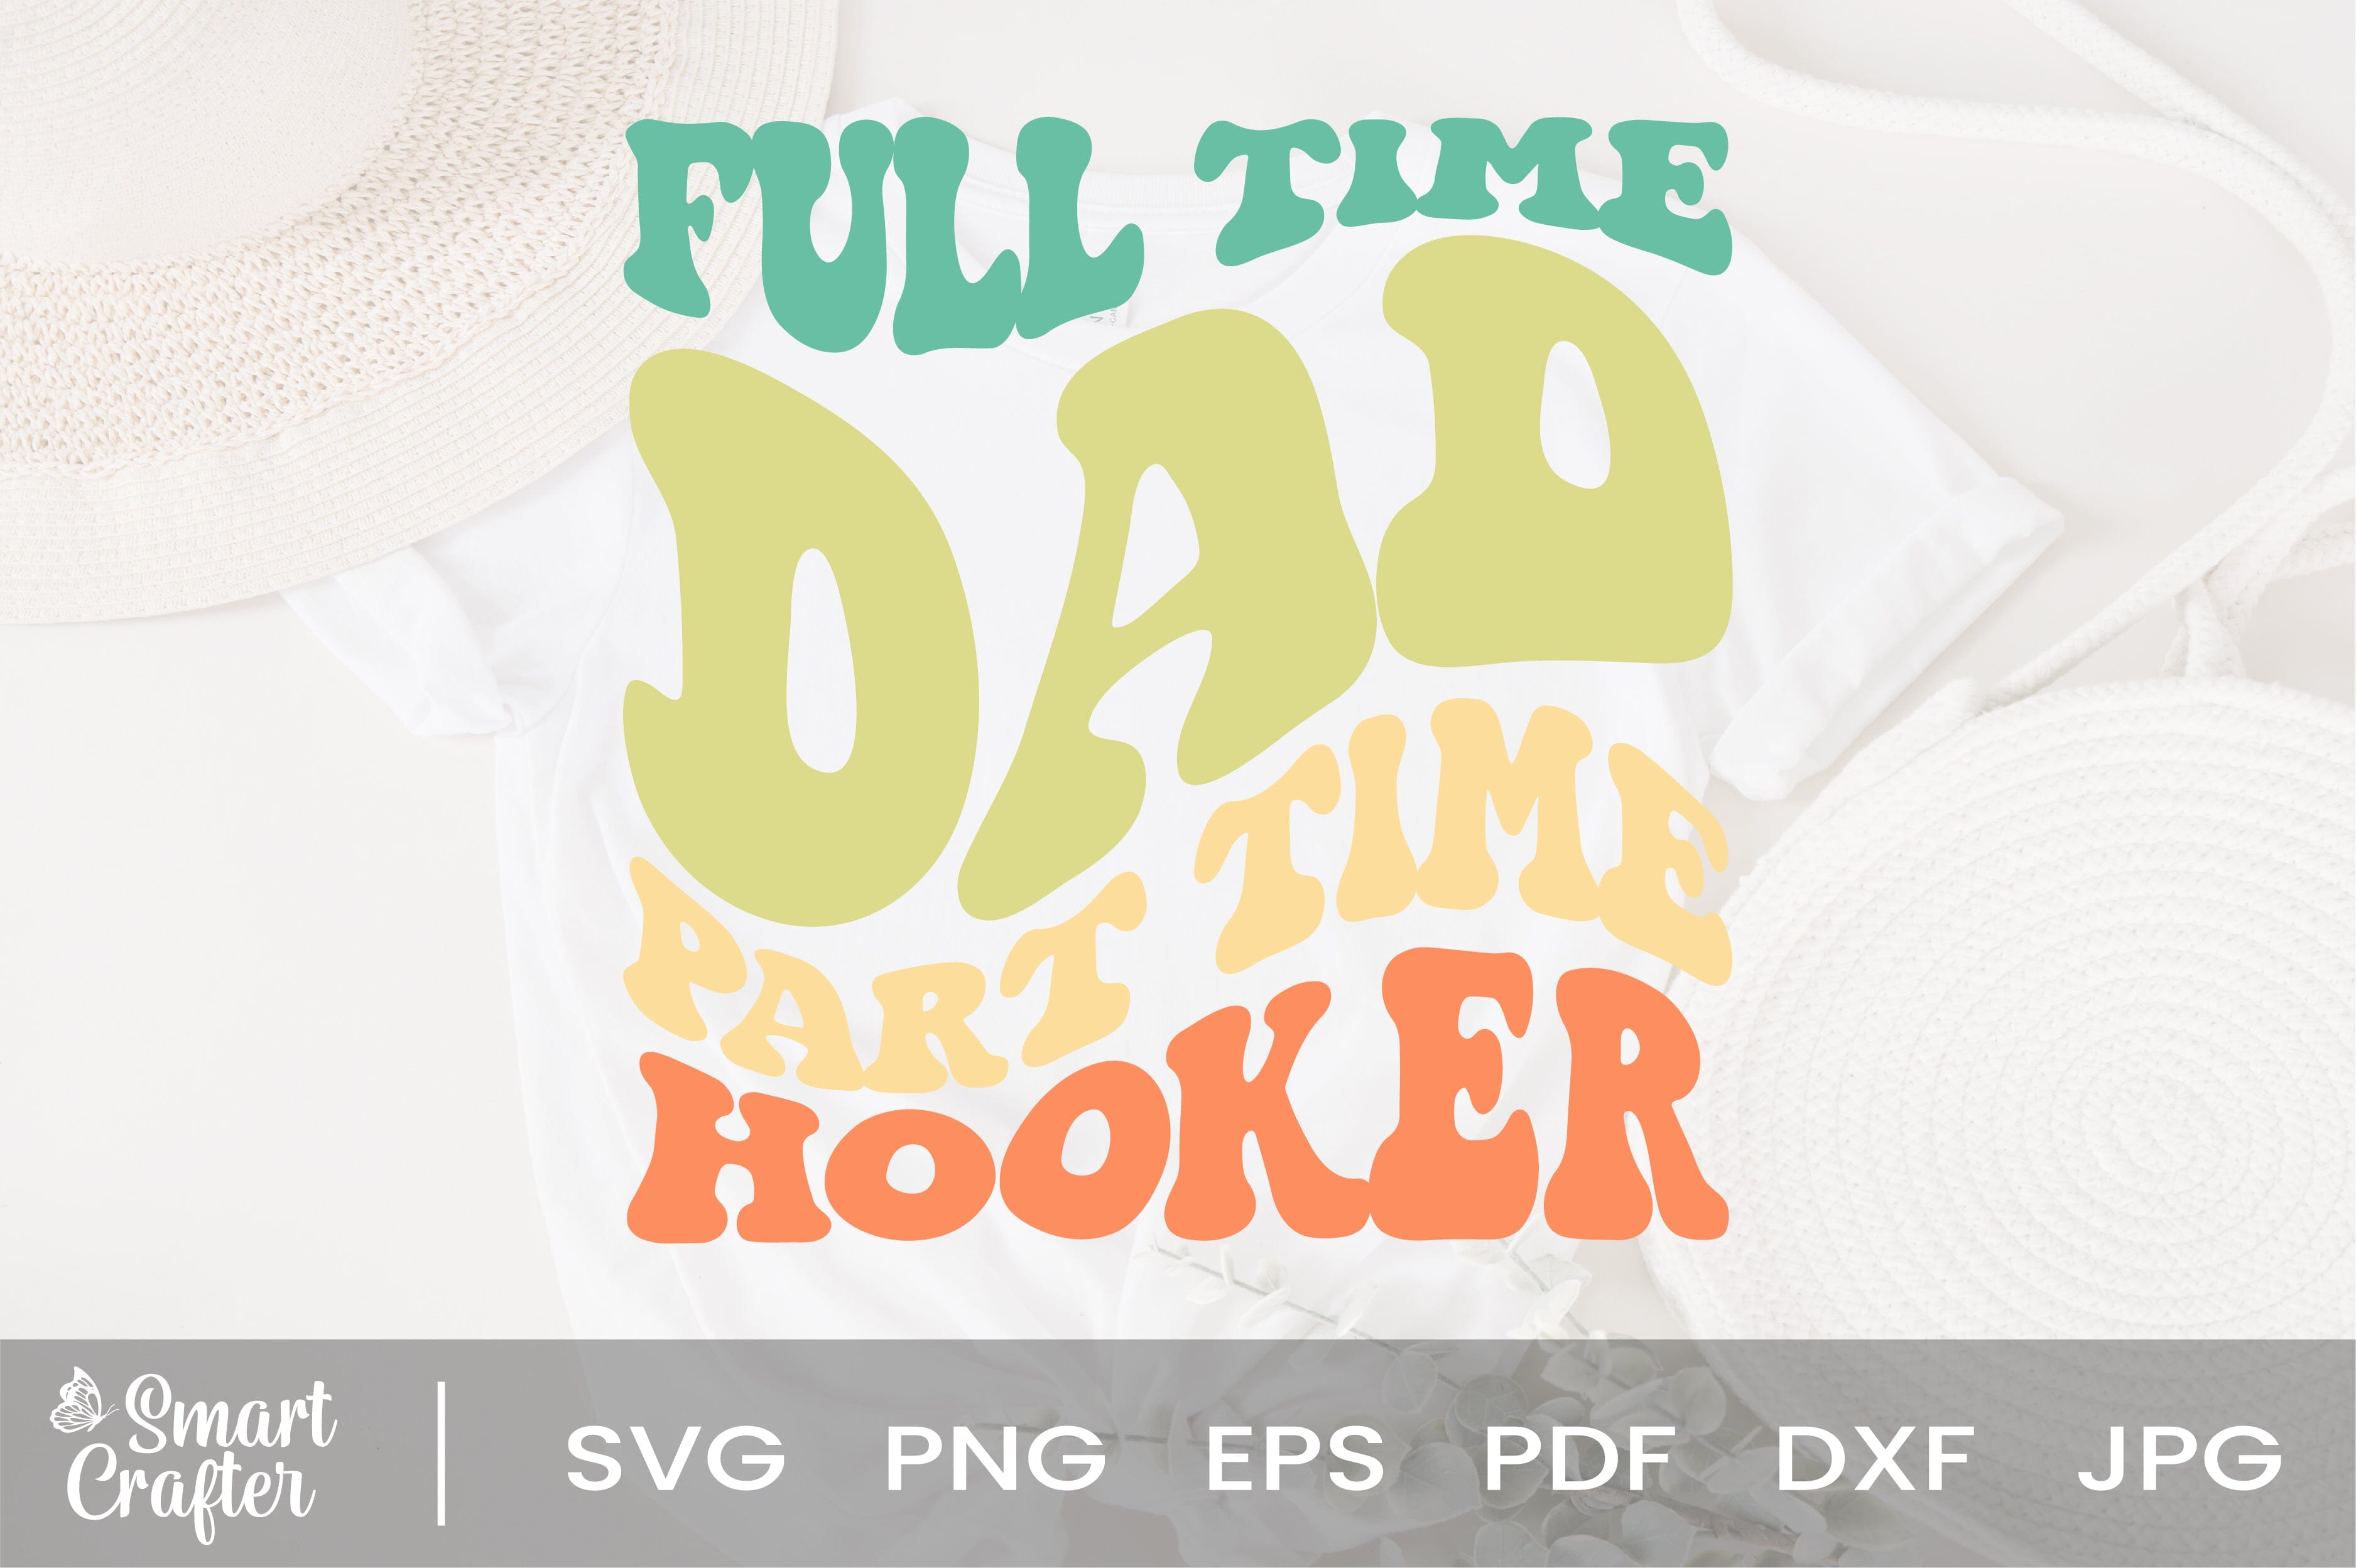 Fulltime Dad Parttime Hooker Dad Cap